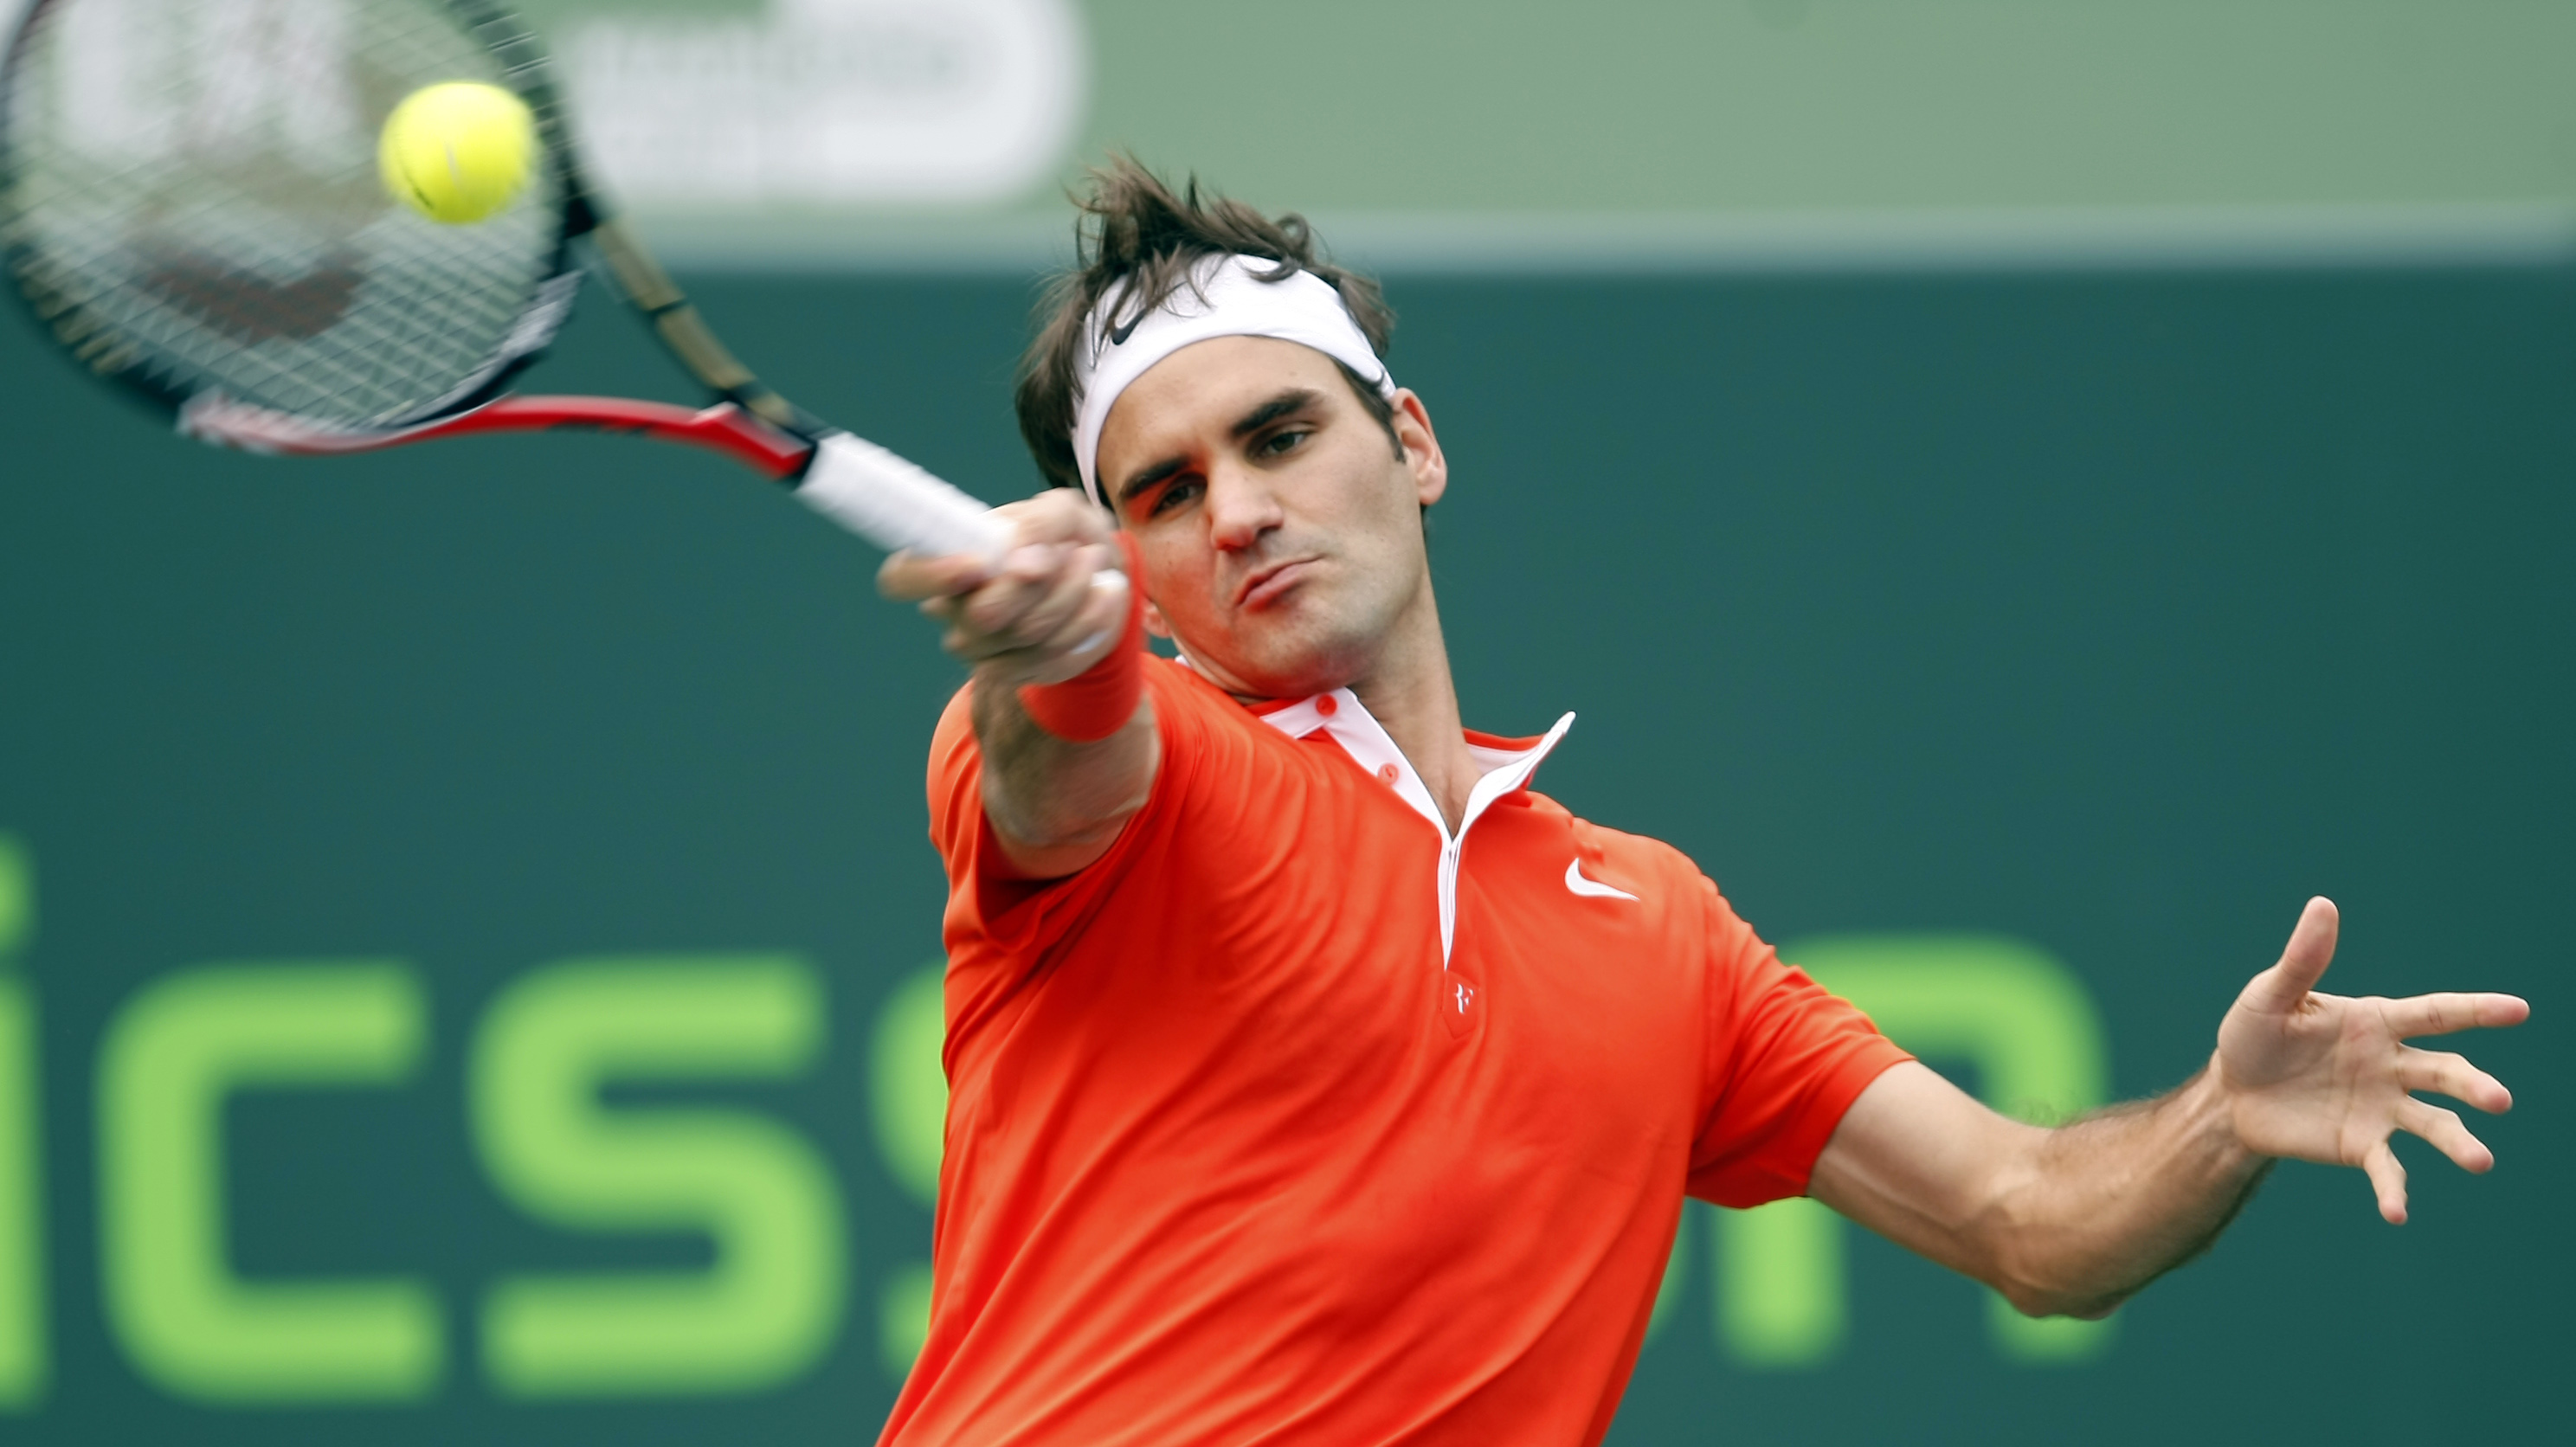 Miami, ATP, Tennis, Roger Federer